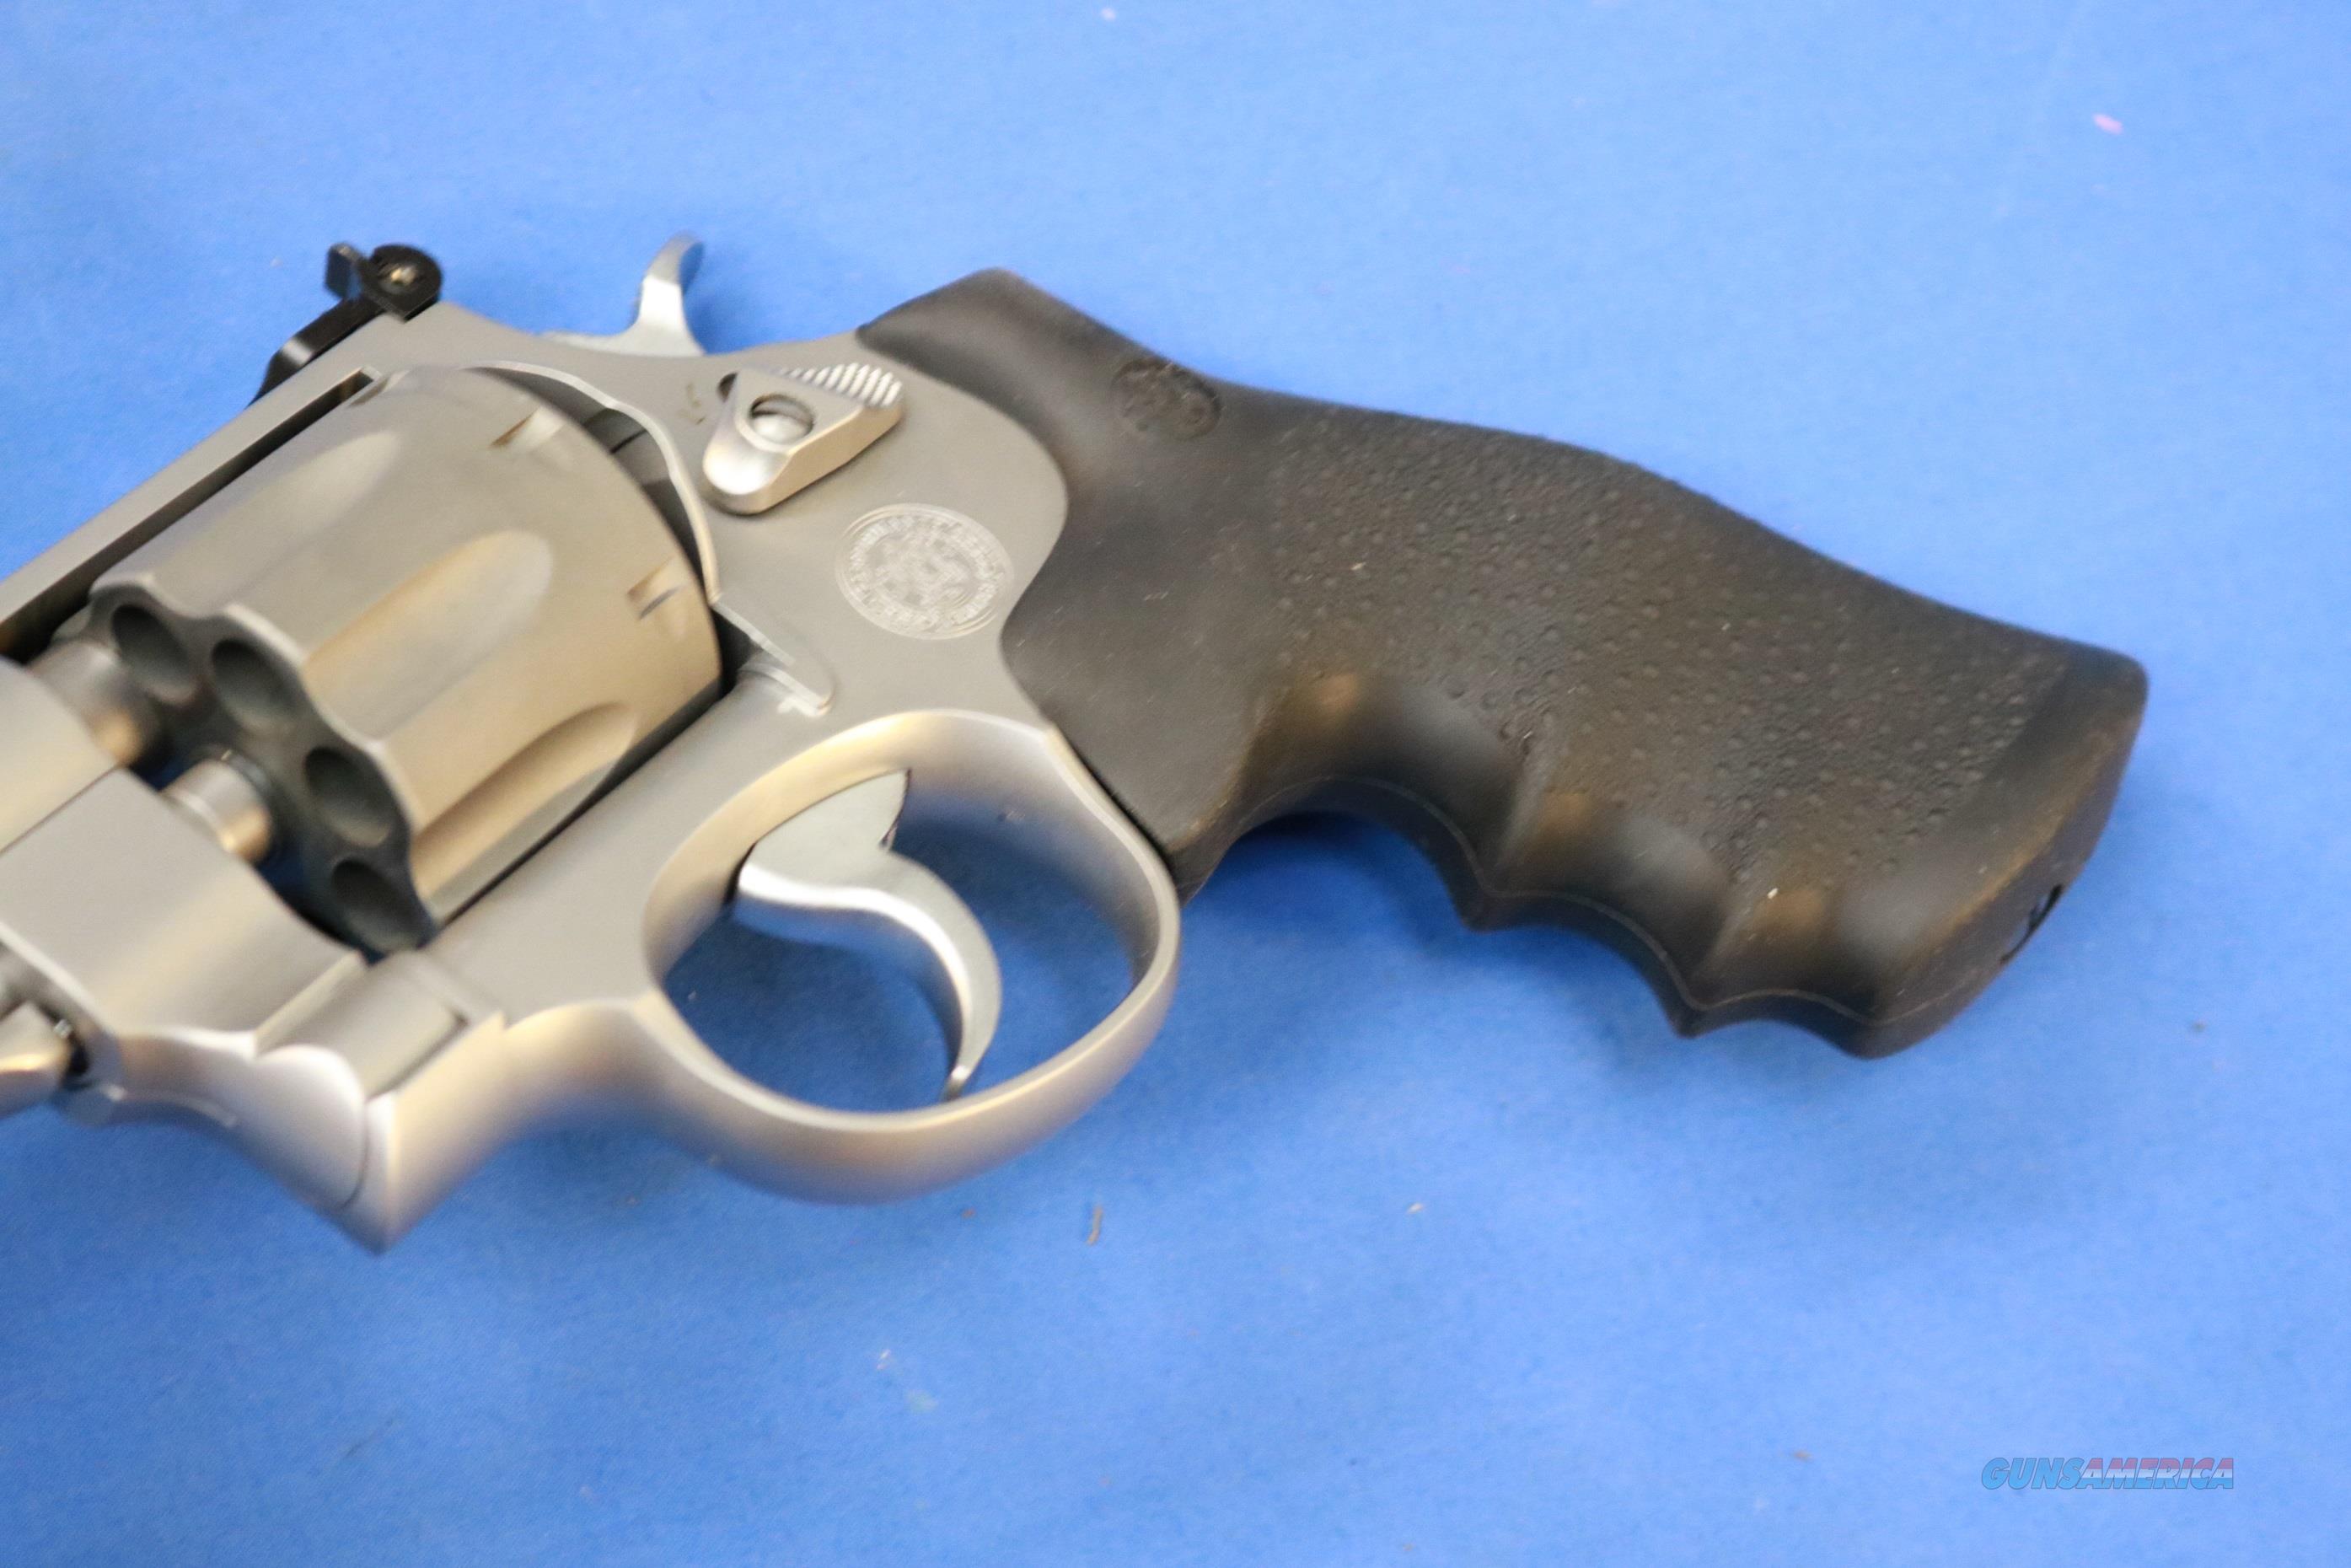 jerry miculek 9mm revolver